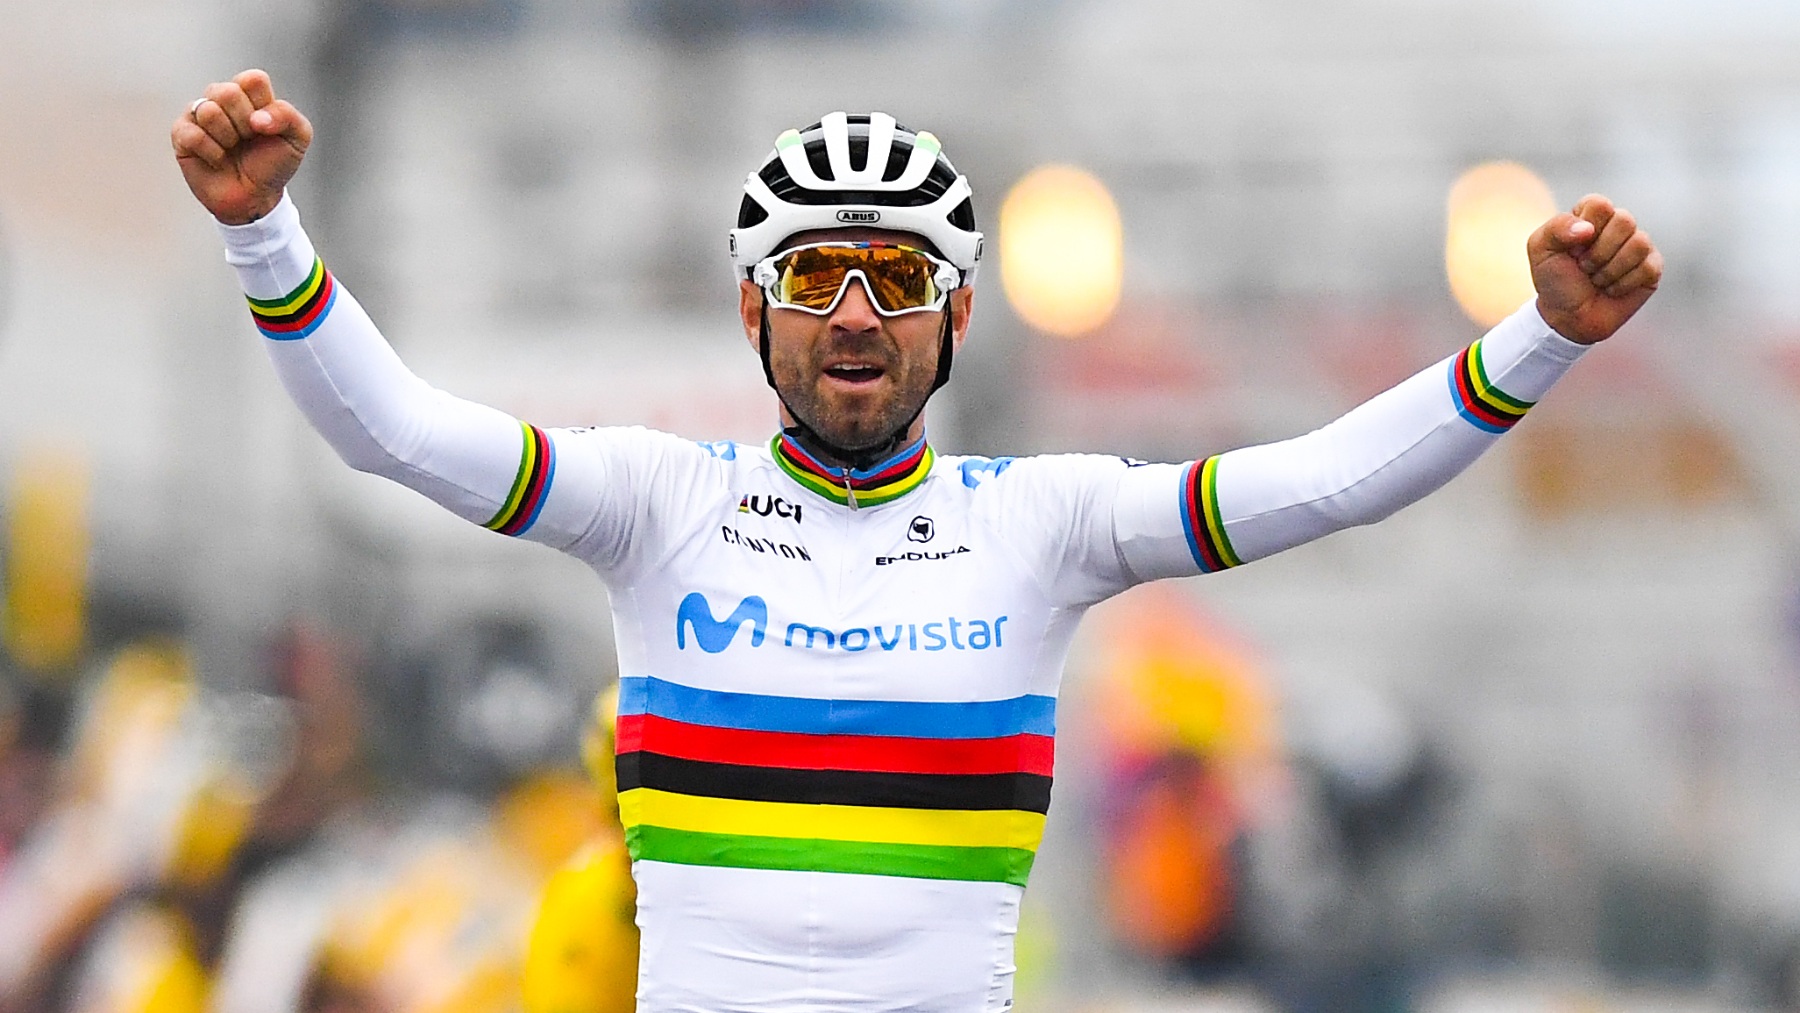 Valverde con su maillot arcoiris de campeón mundial. (Getty)